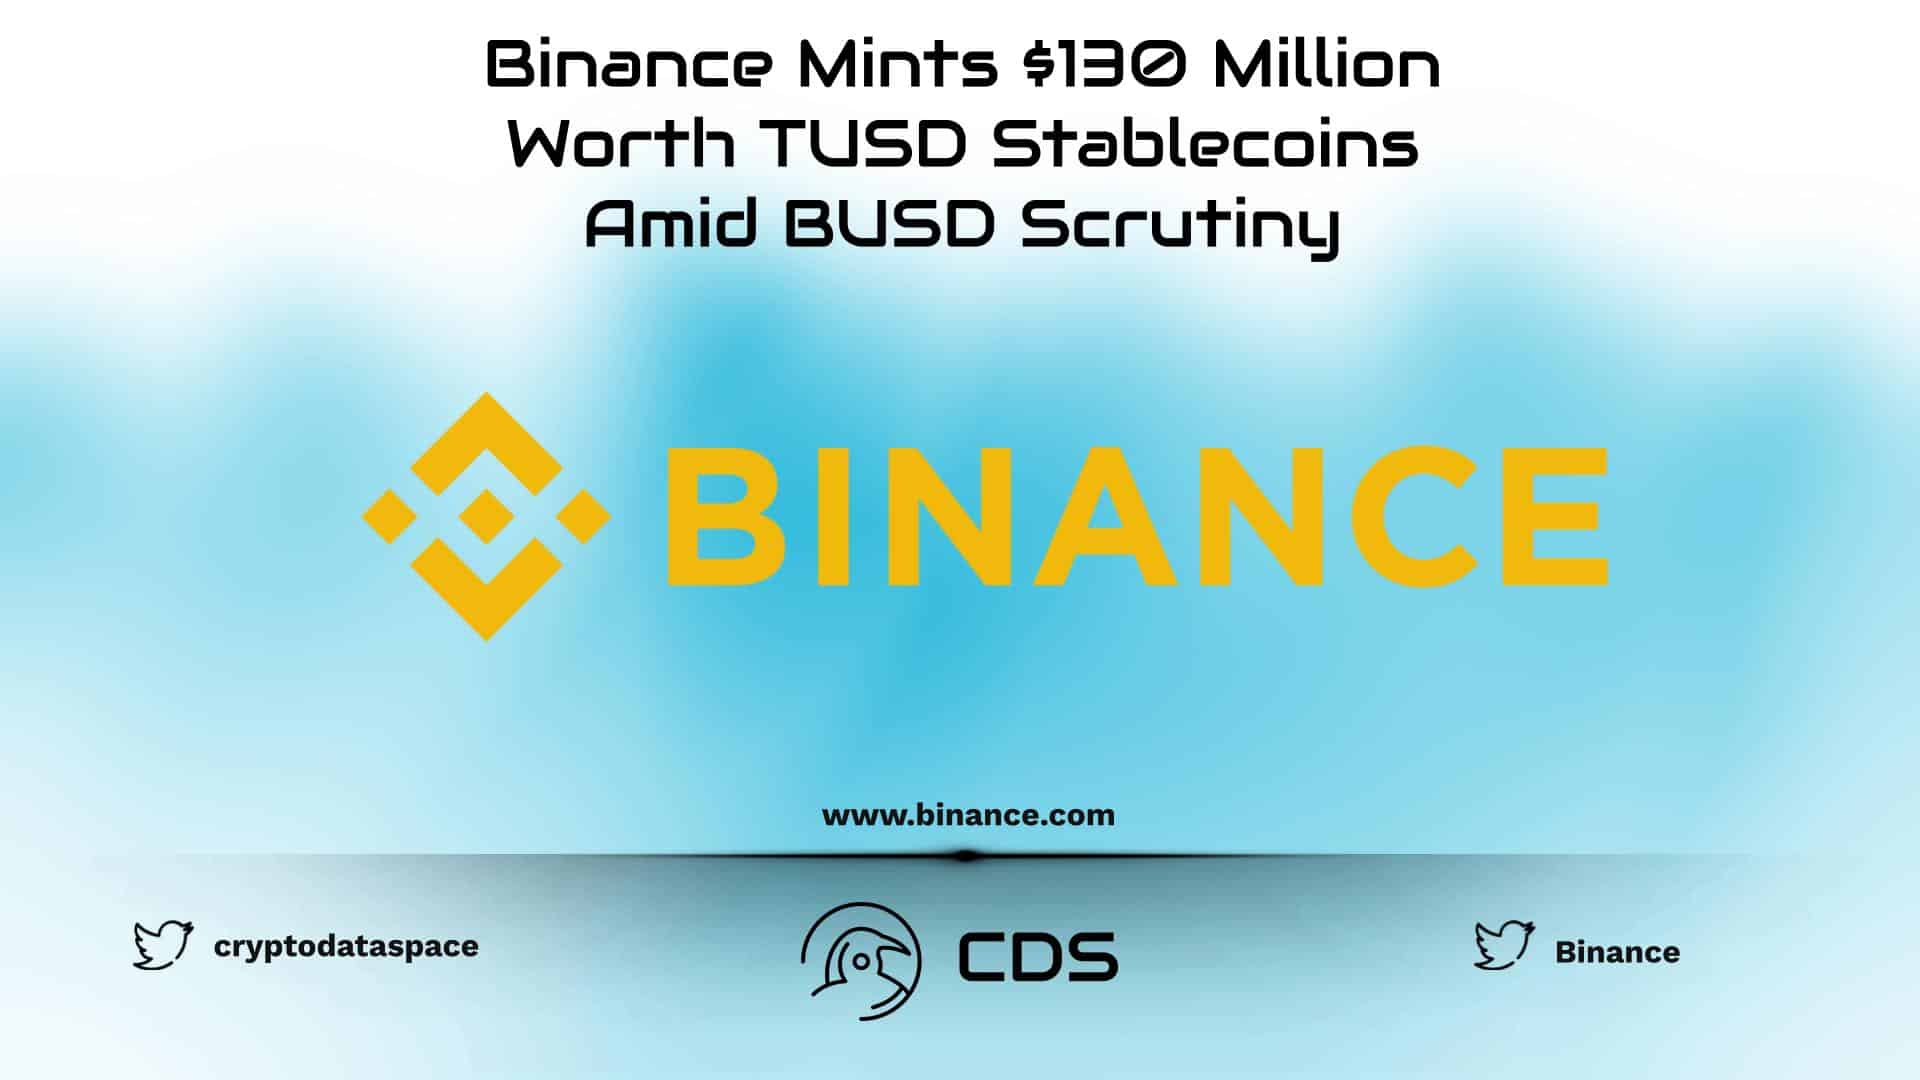 Binance Mints $130 Million Worth TUSD Stablecoins Amid BUSD Scrutiny